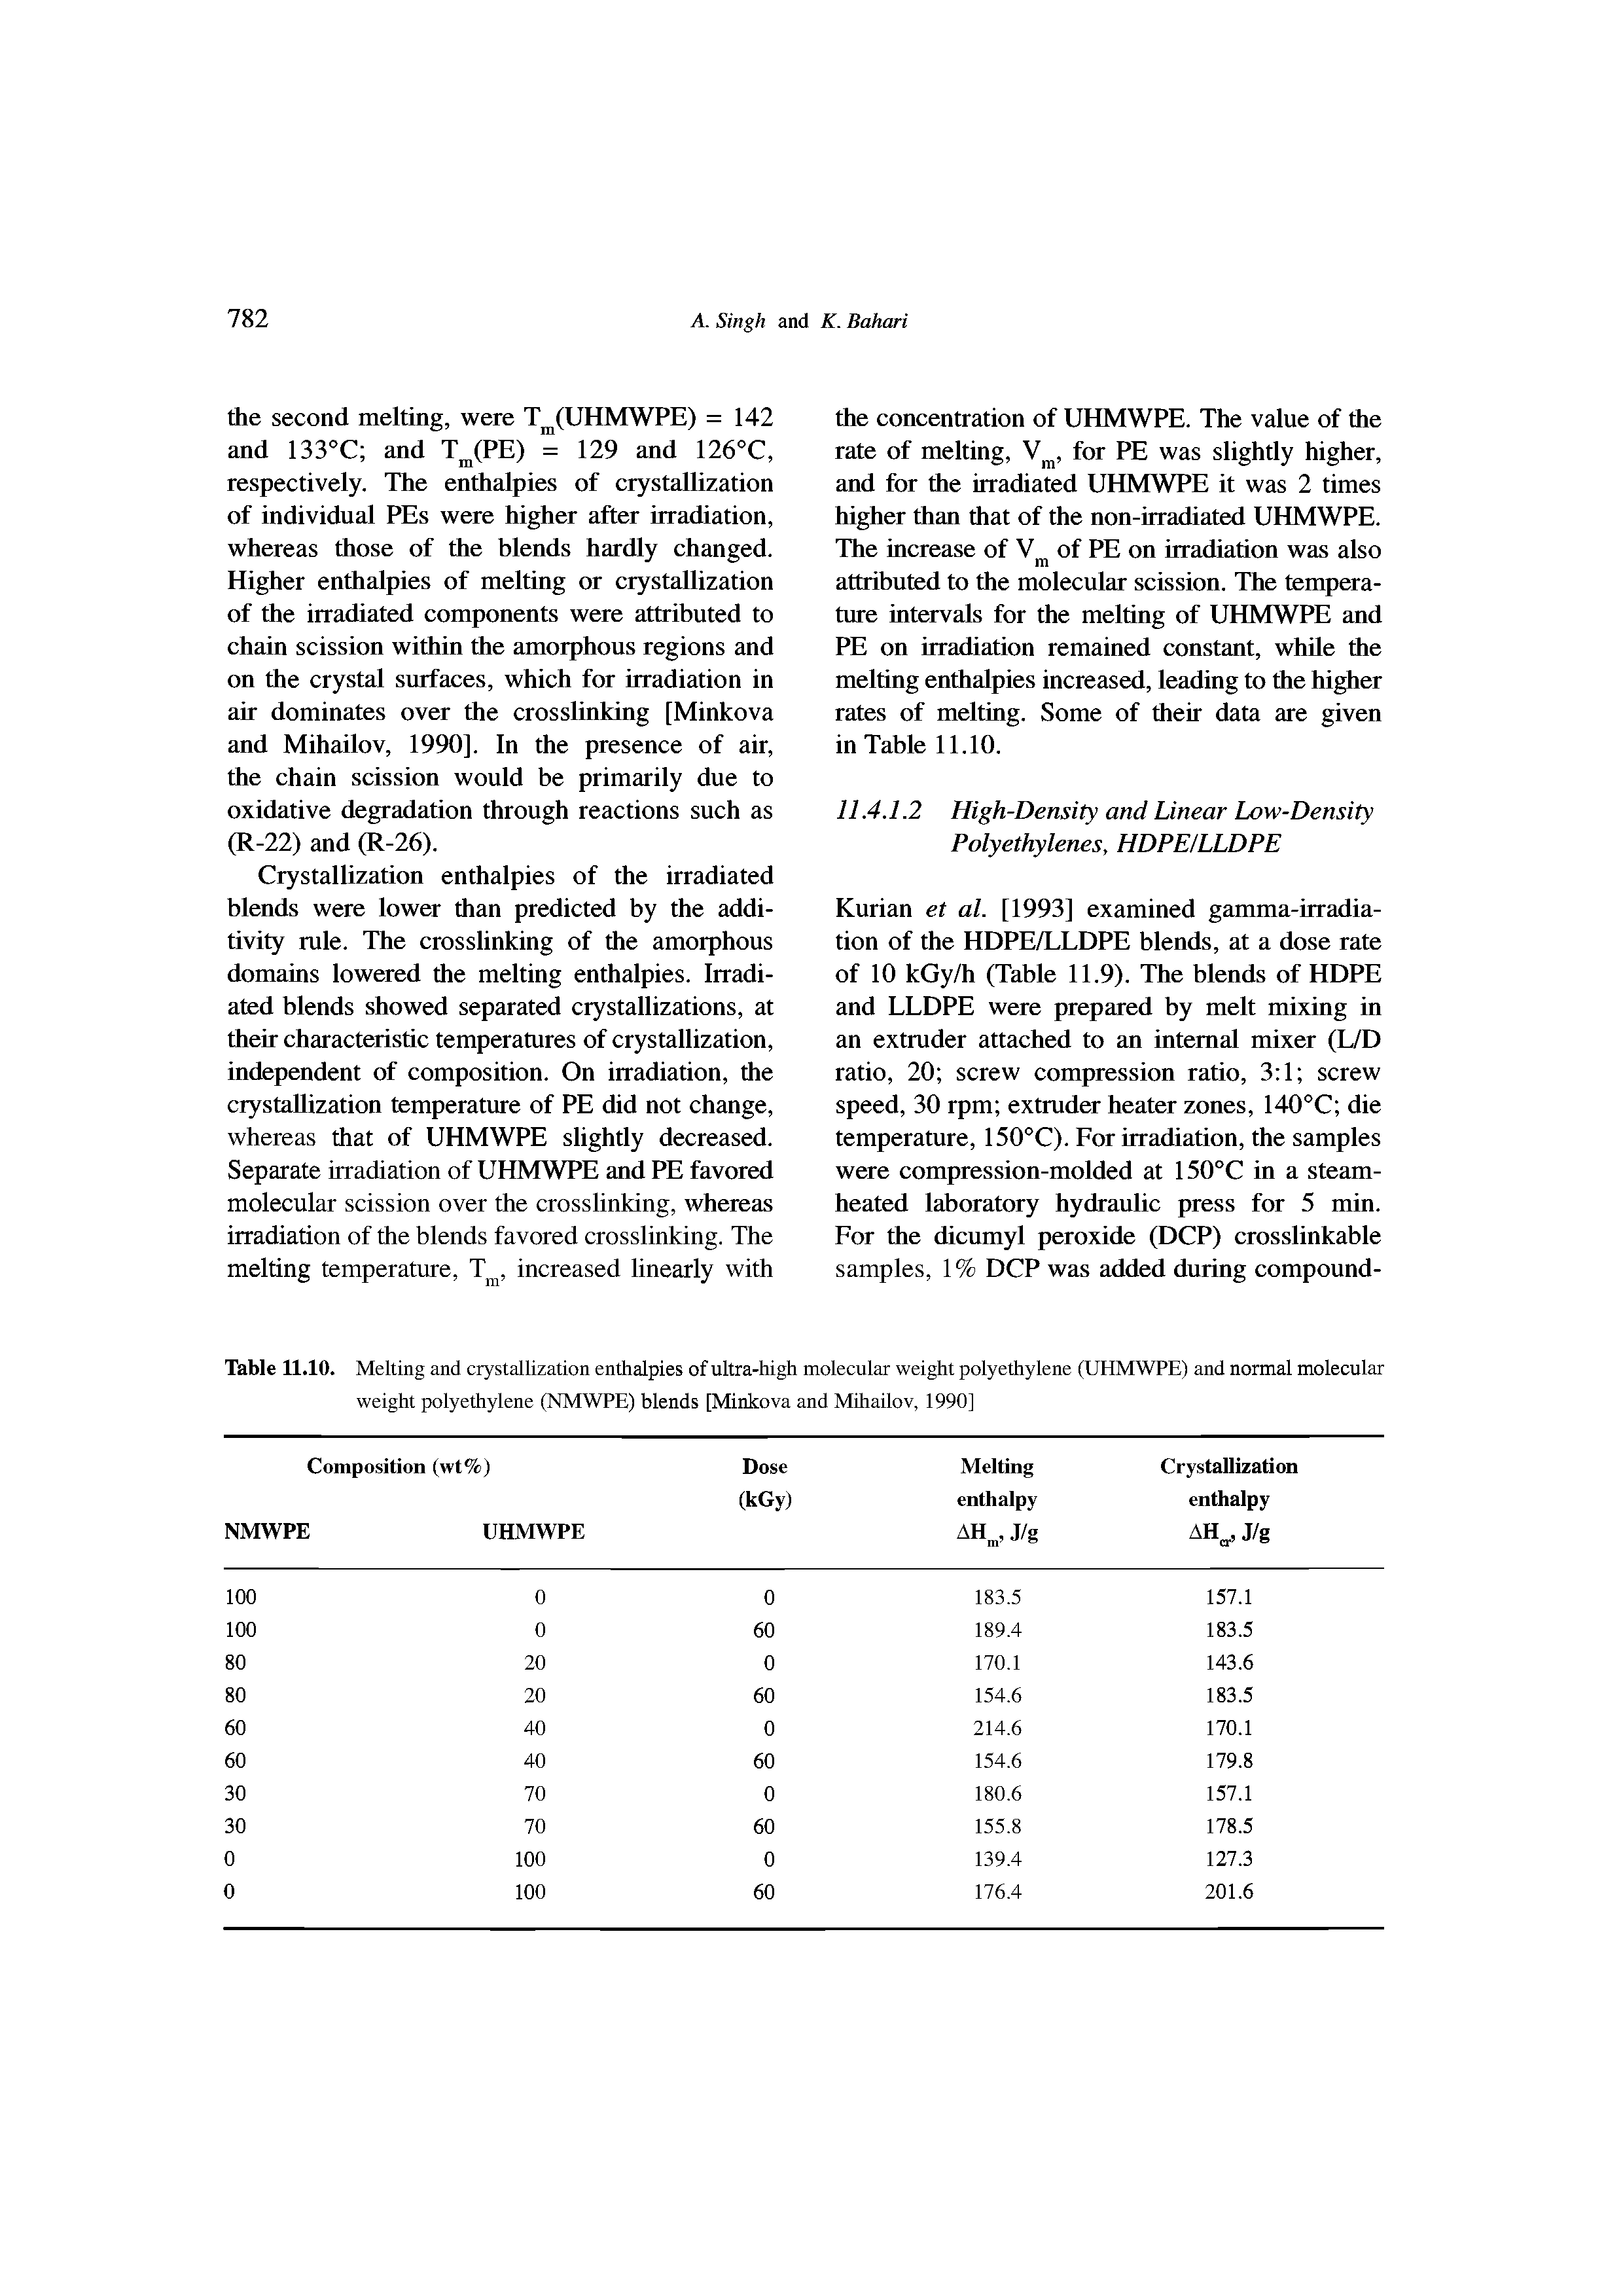 Table 11.10. Melting and crystallization enthalpies of ultra-high molecular weight polyethylene (UHMWPE) and normal molecular weight polyethylene (NMWPE) blends [Minkova and Mihailov, 1990]...